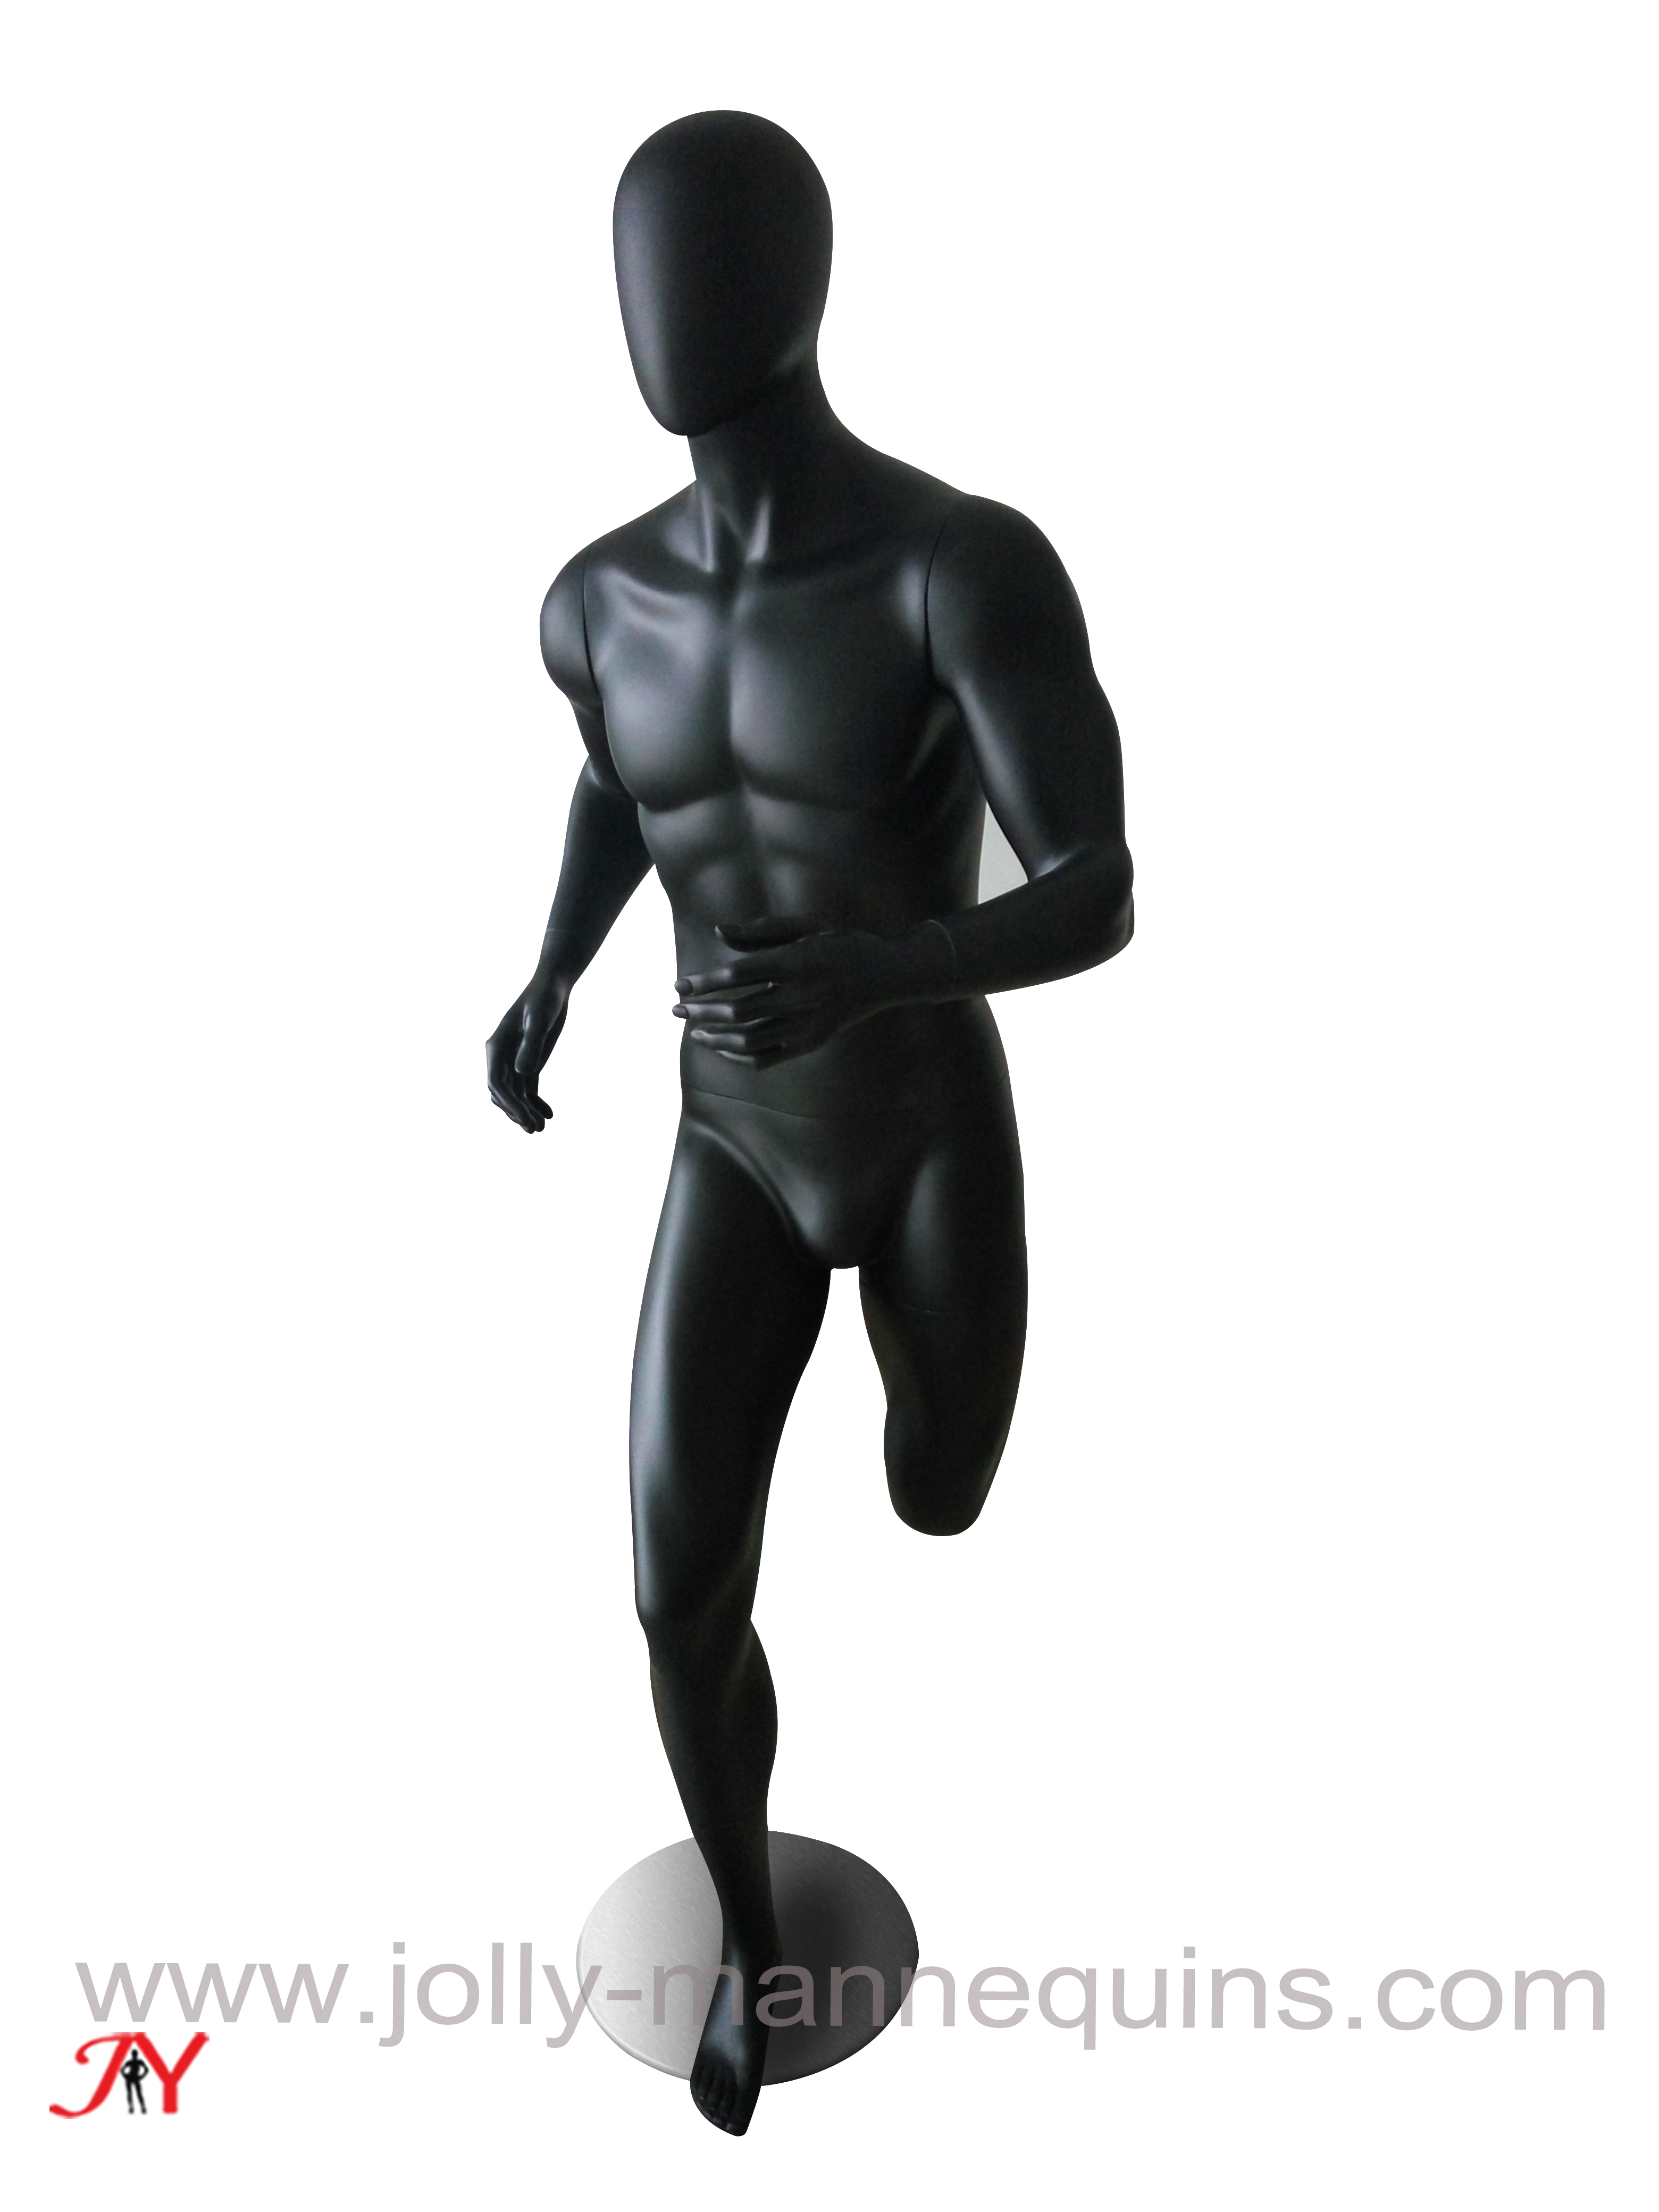 Jolly mannequins-egghead male mannequins running black matte sport mannequins with muscle JR-2